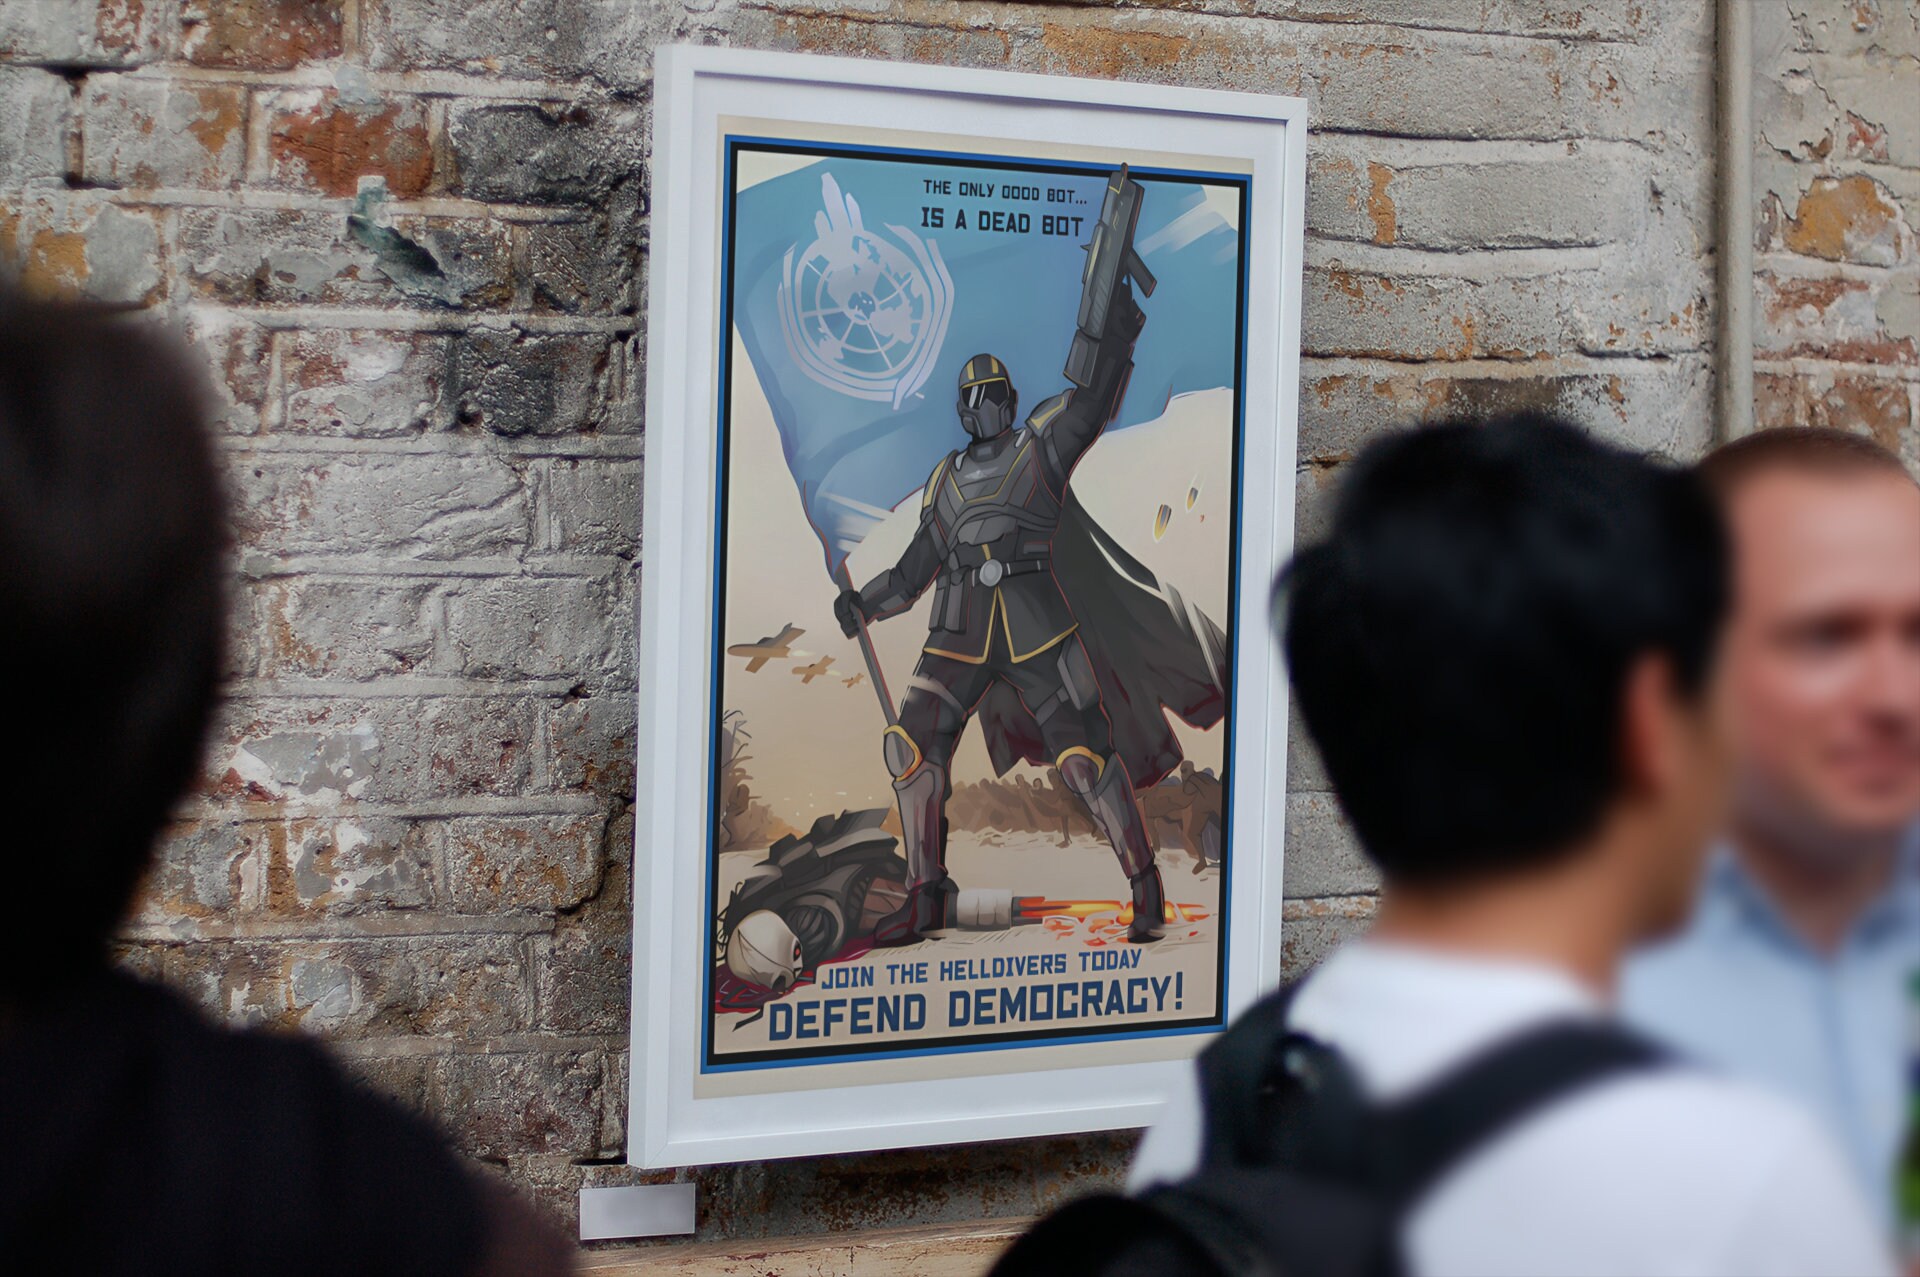 Discover Helldivers 2 Video Game Defend Democracy Propaganda Poster